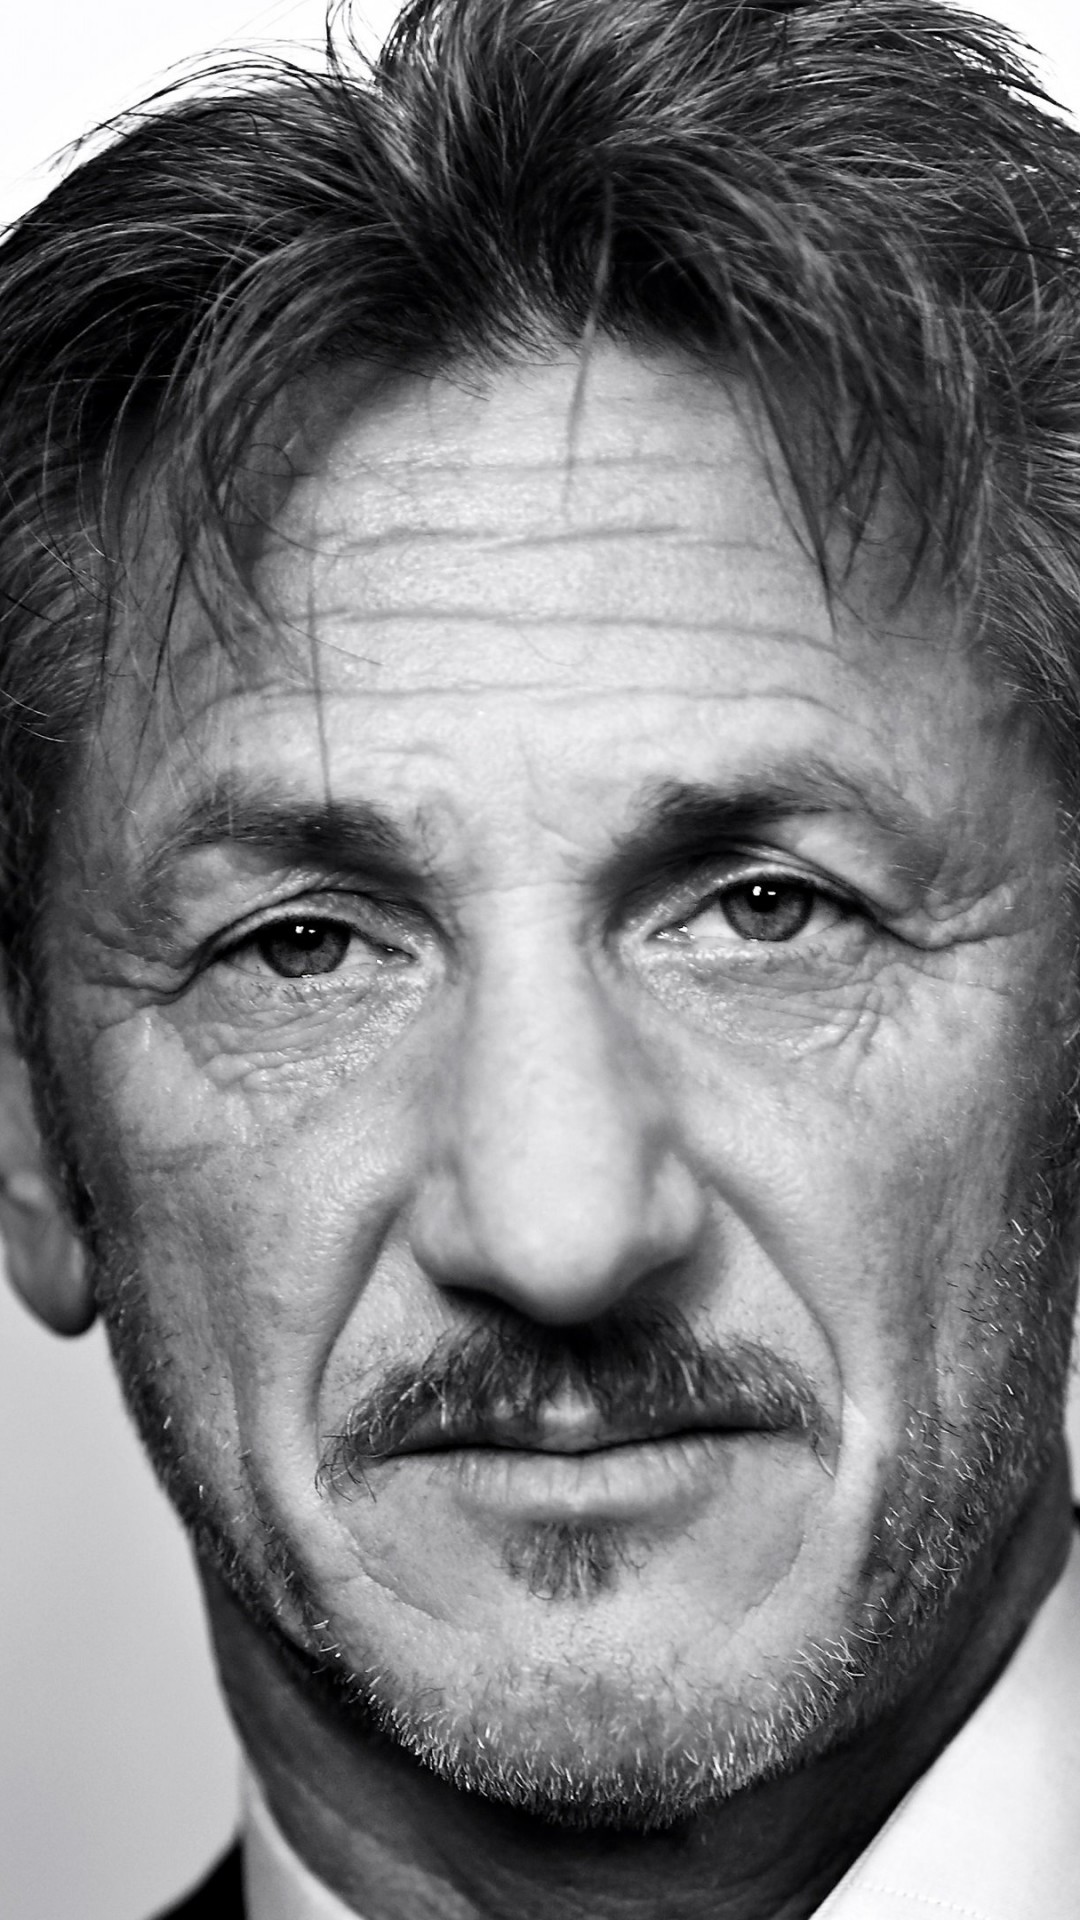 Sean Penn Portrait in Black & White Wallpaper for SONY Xperia Z3